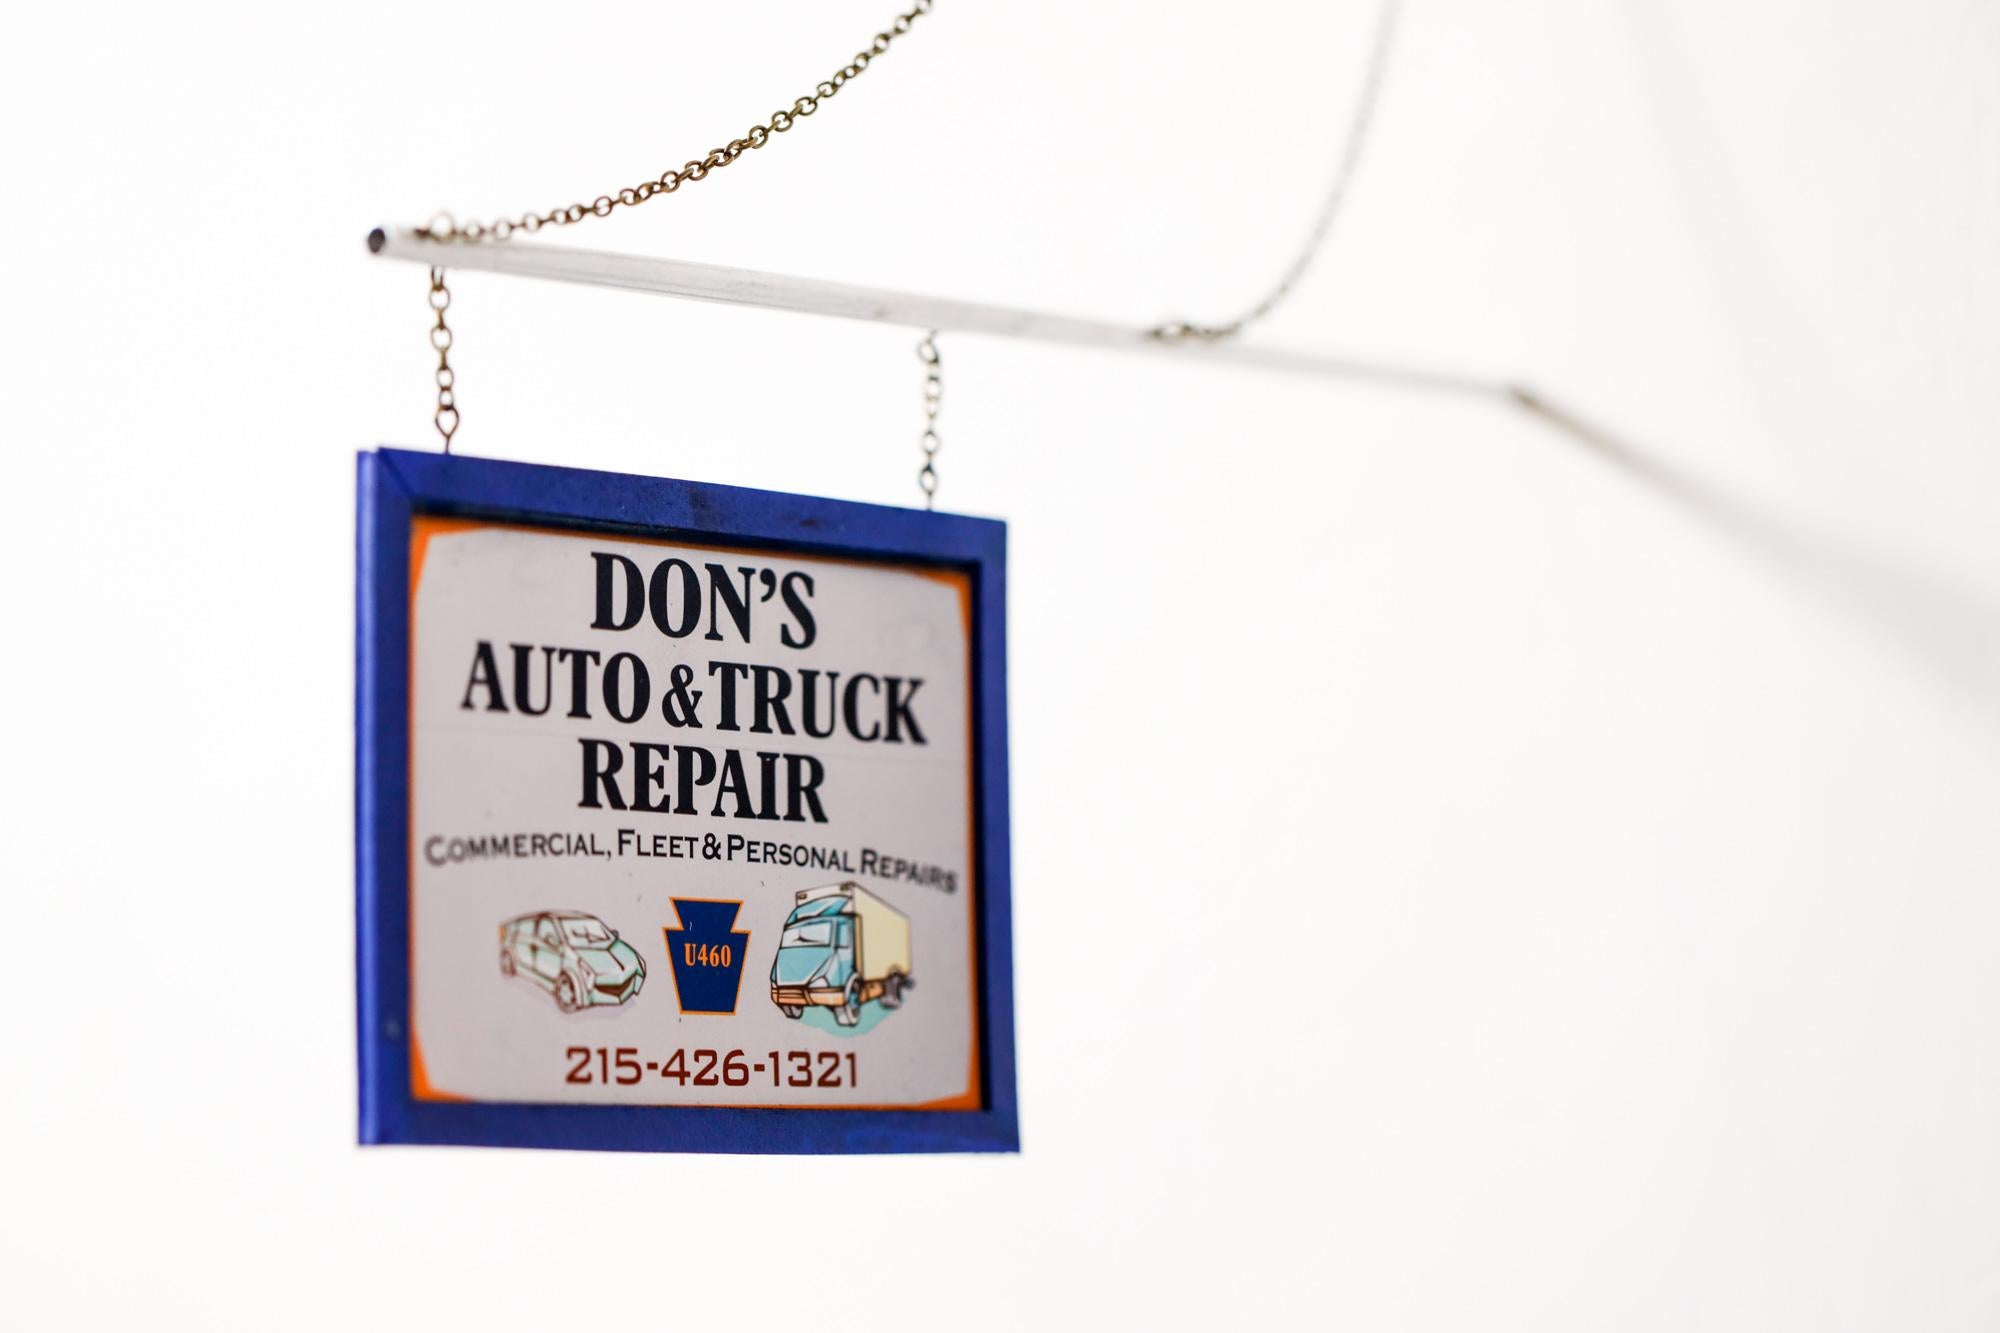 Don's Auto & Truck Repair - Contemporary Sculpture by Drew Leshko